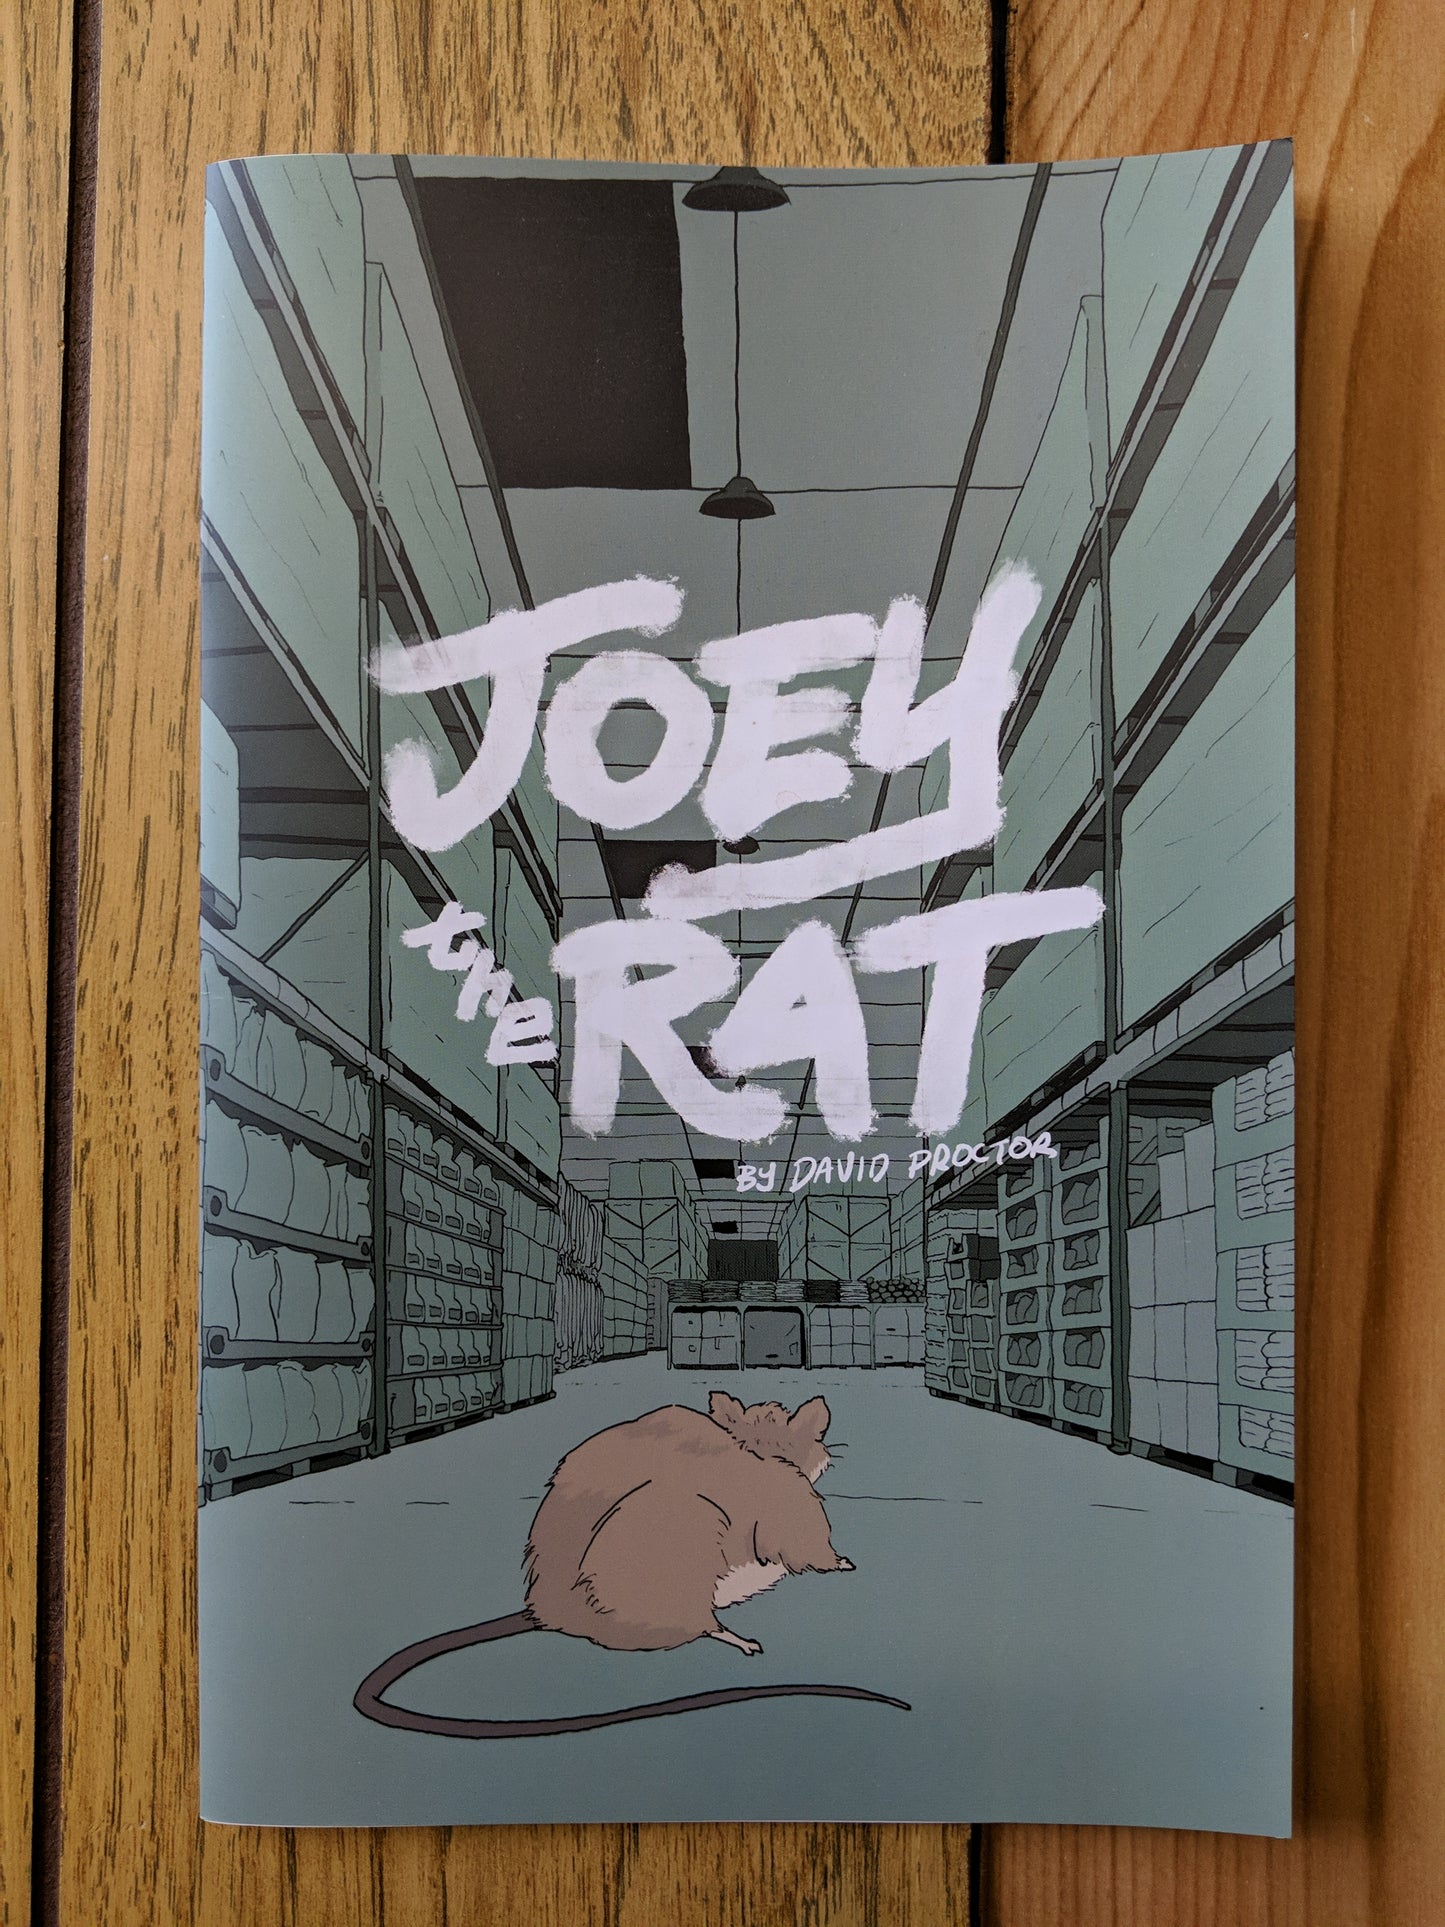 Joey the Rat